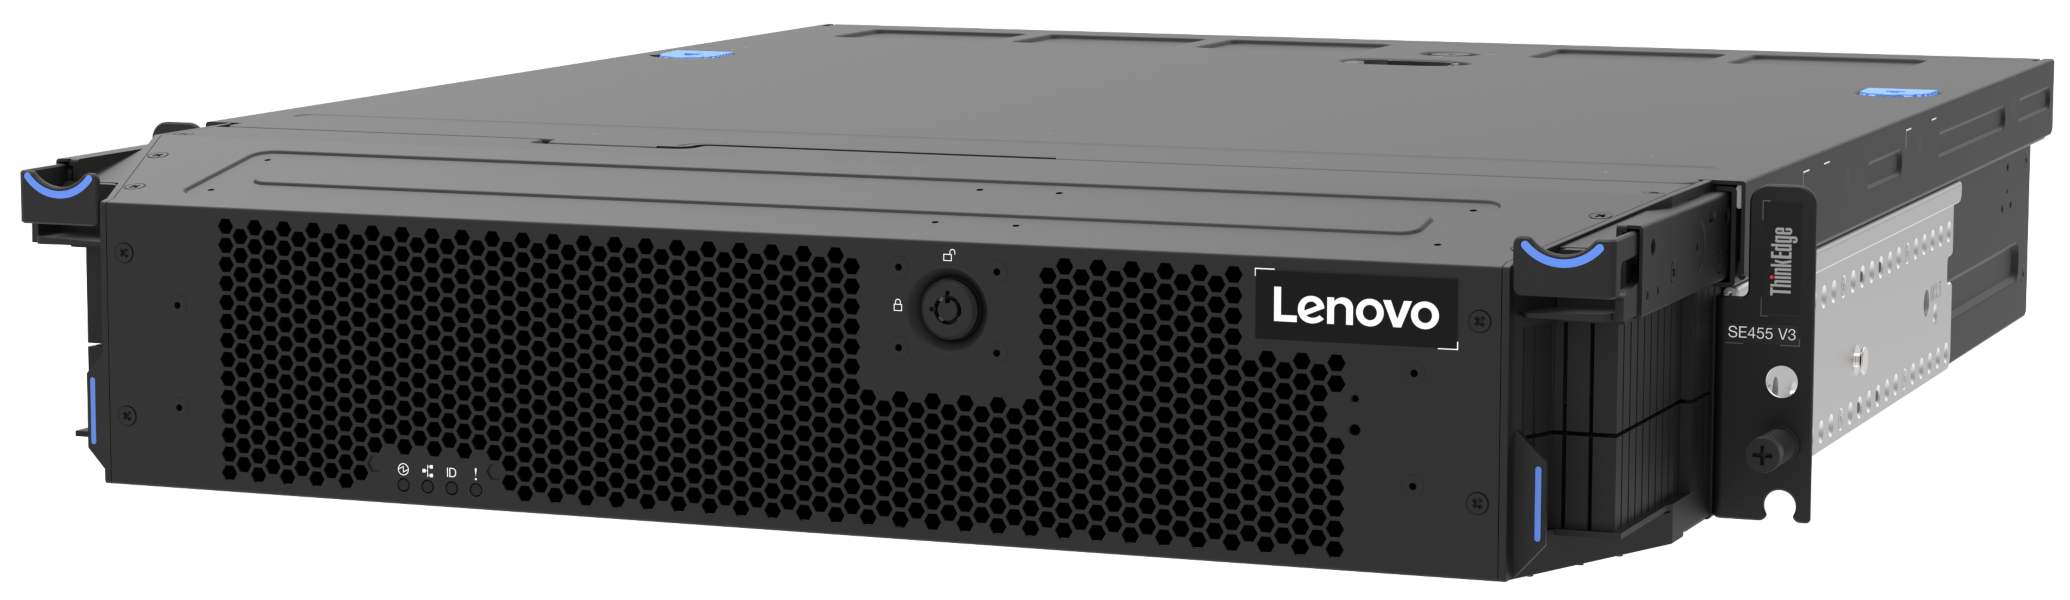 Lenovo ThinkEdge SE455 V3 expande las posibilidades de la informática Edge